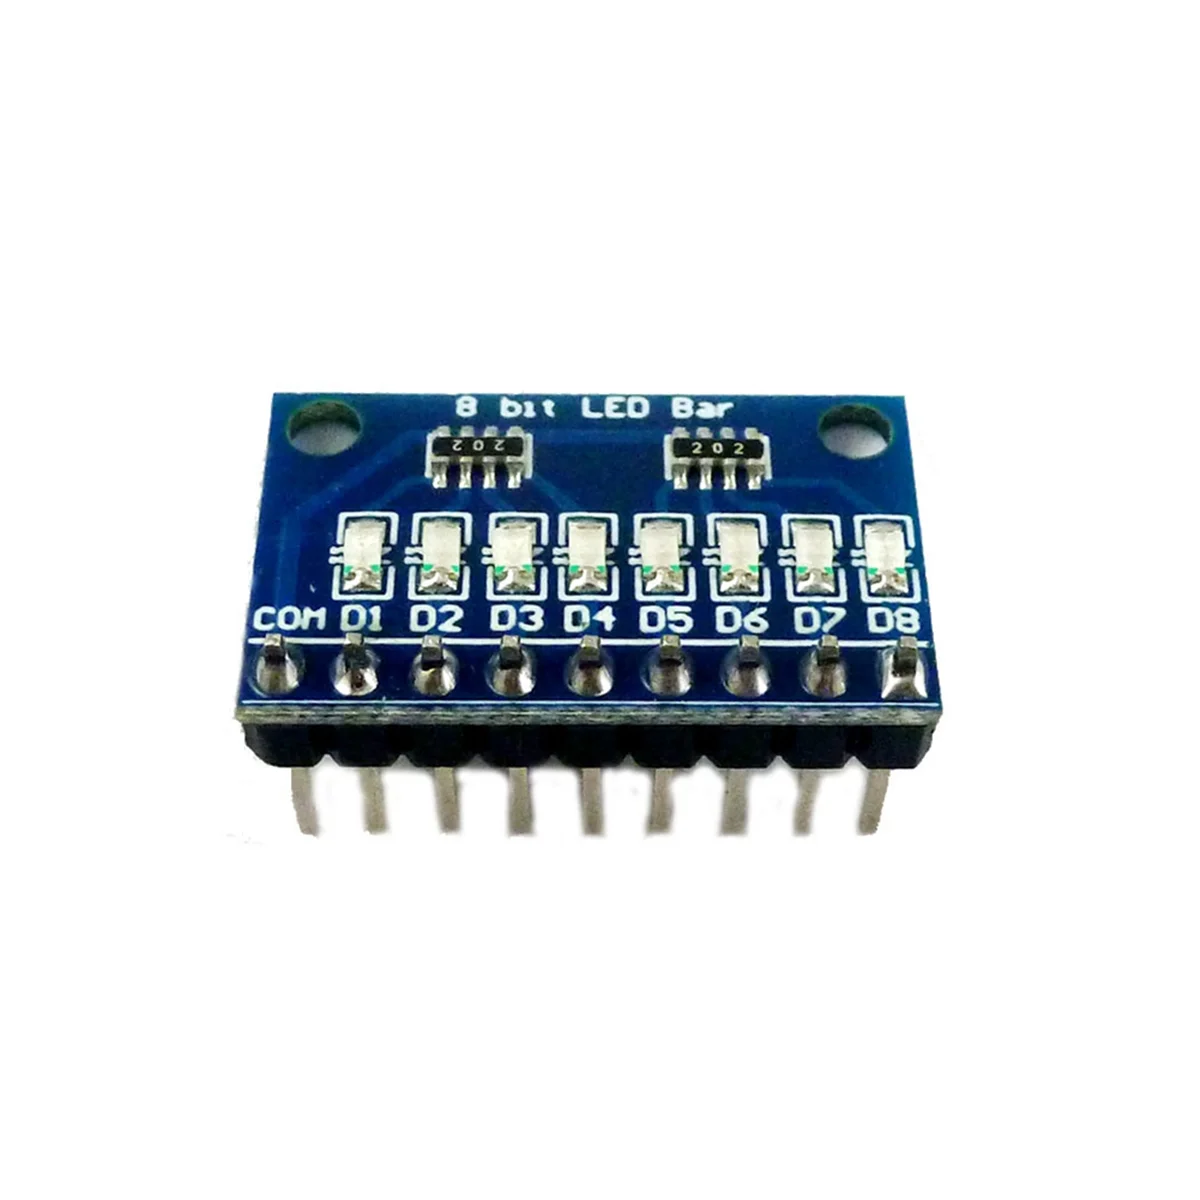 

1Pcs 3.3V 5V 8 Bit Blue Common Cathode LED Indicator Module DIY Kit for Arduino NANO UNO Raspberry Pi 4 Nodemcu V3